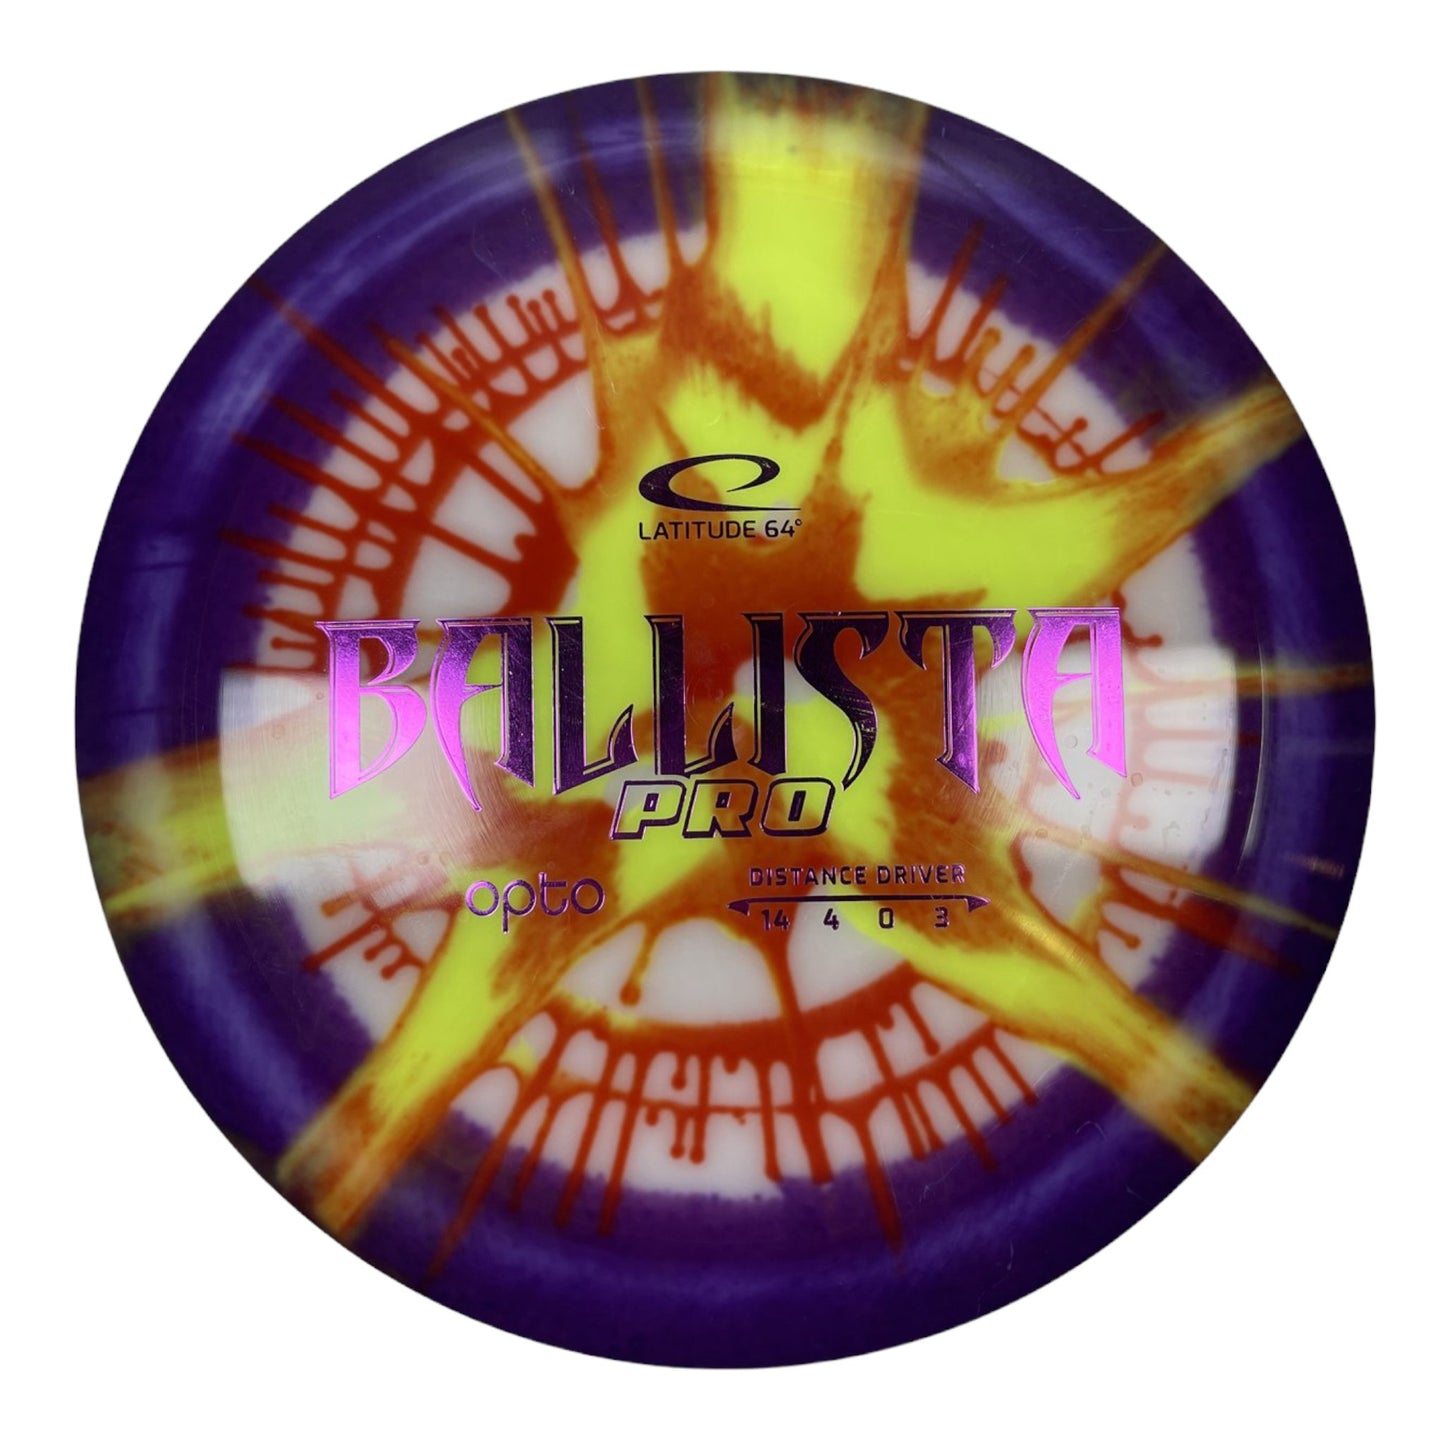 Latitude 64 Ballista Pro | Opto | Purple/Tiedye 173g Disc Golf